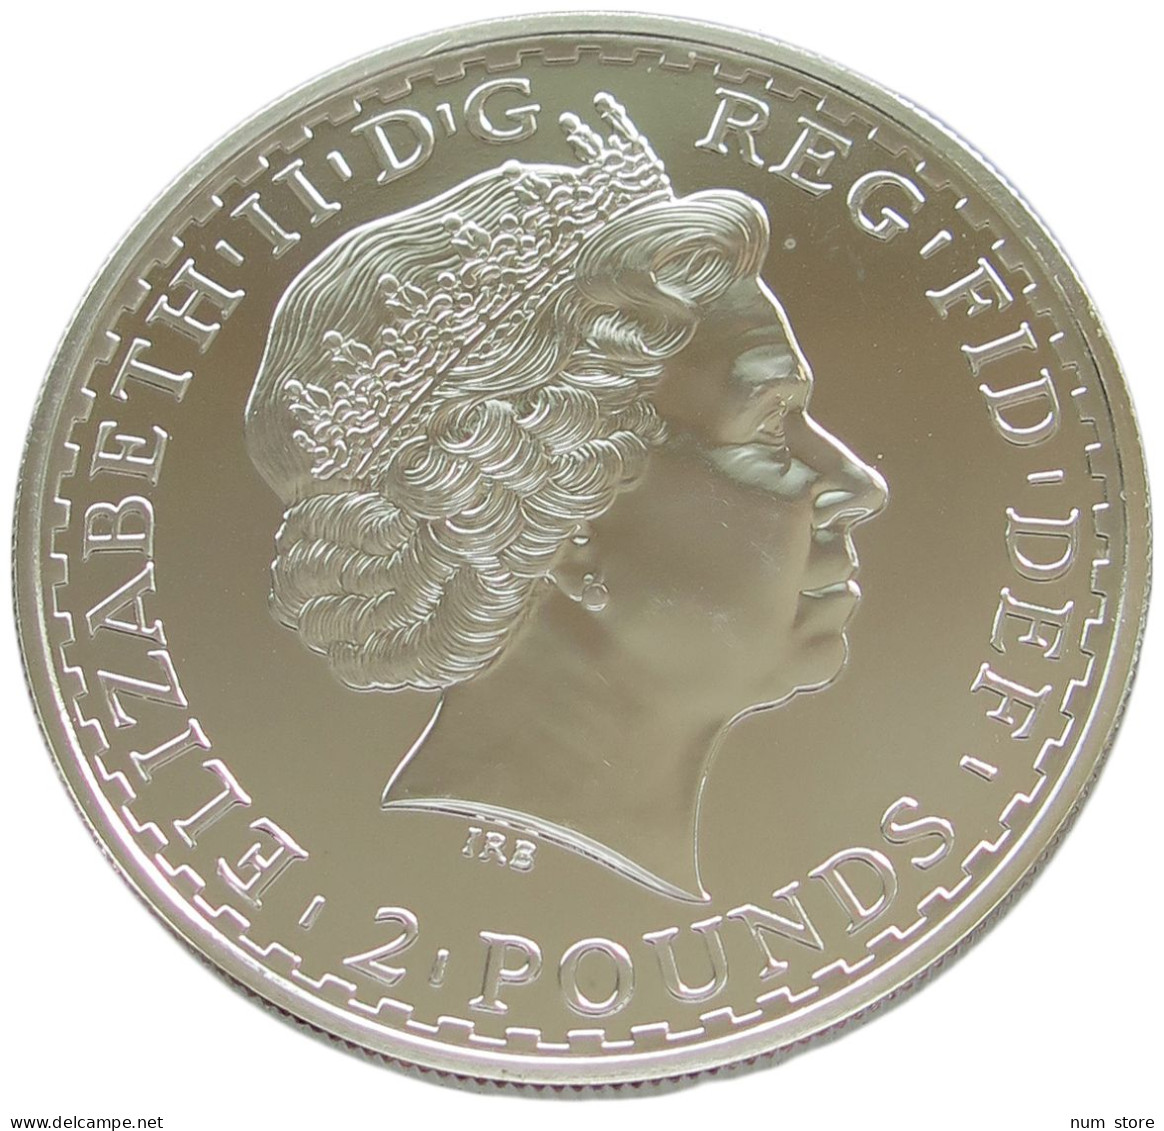 GREAT BRITAIN 2 POUNDS 2007 Elisabeth II. (1952-) #w029 0703 - 2 Pounds